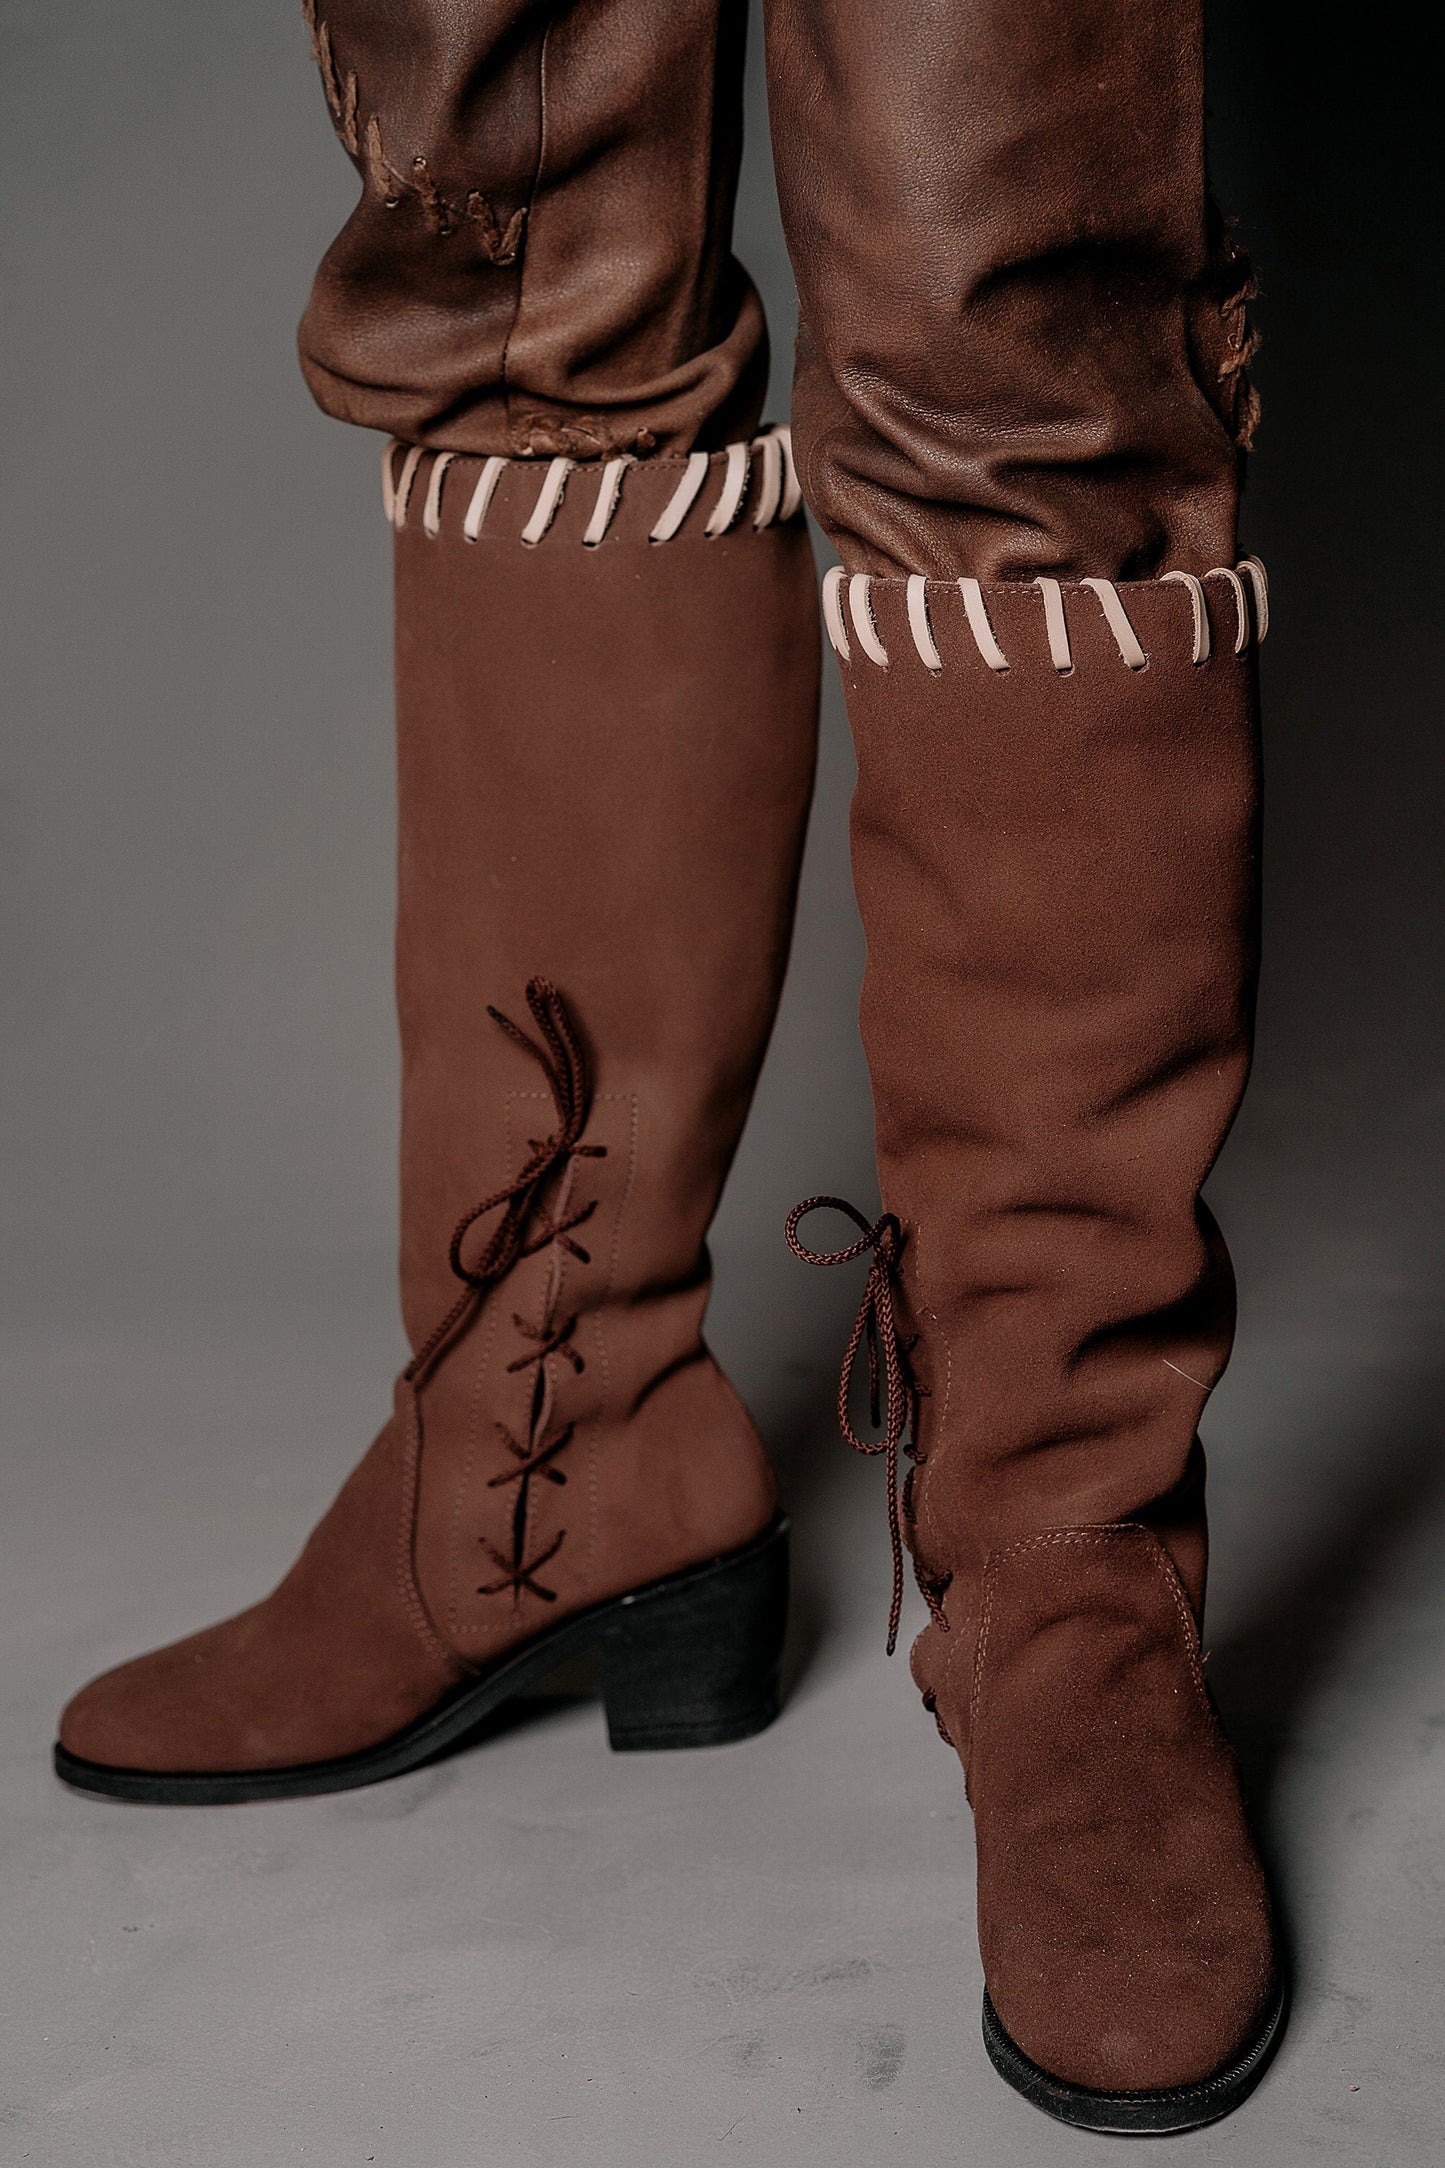 Porunn leather boots (Vikings)